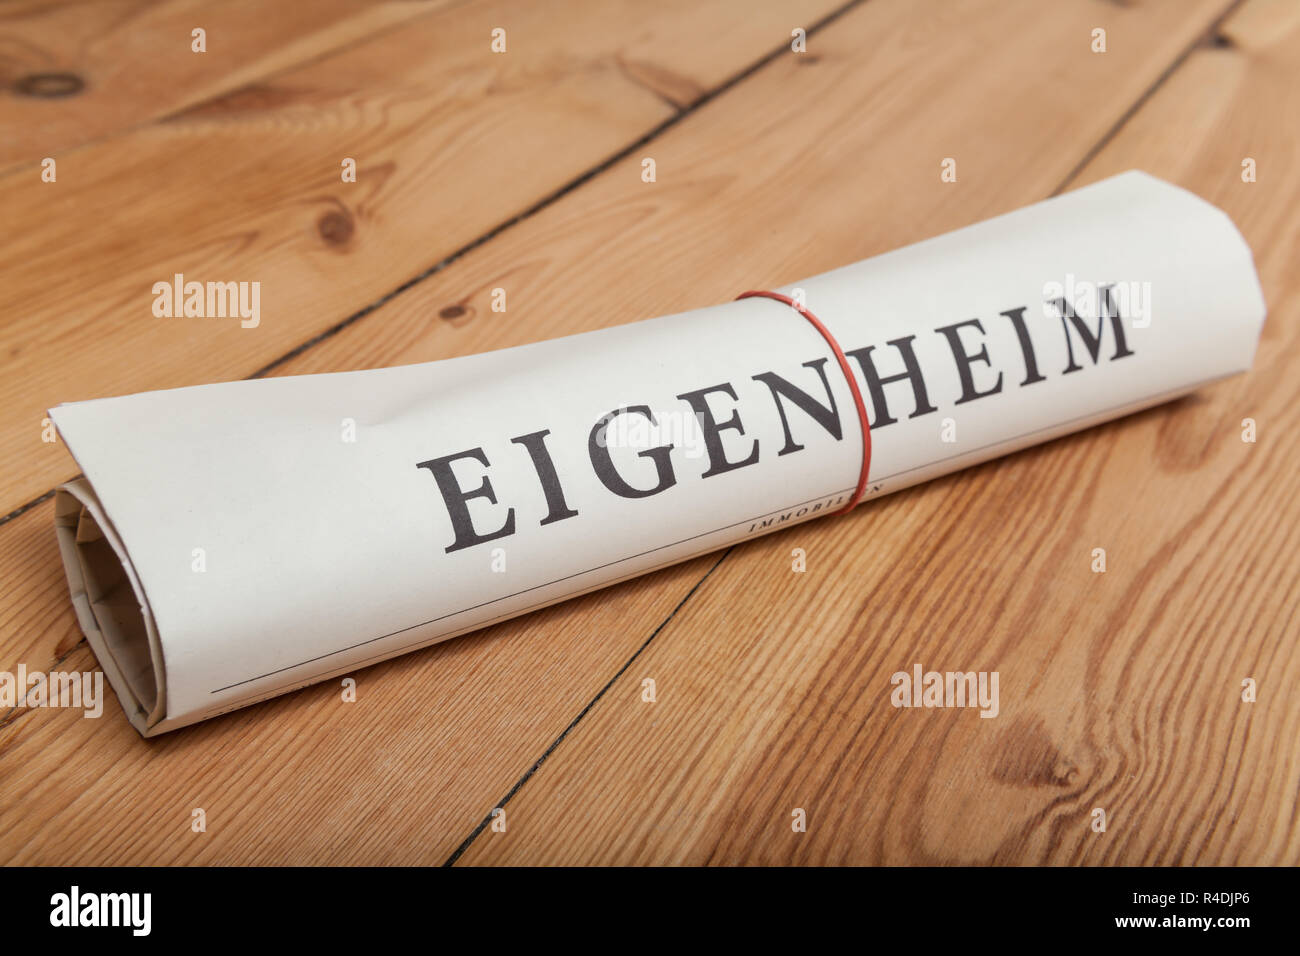 eigenheim newspaper german Stock Photo